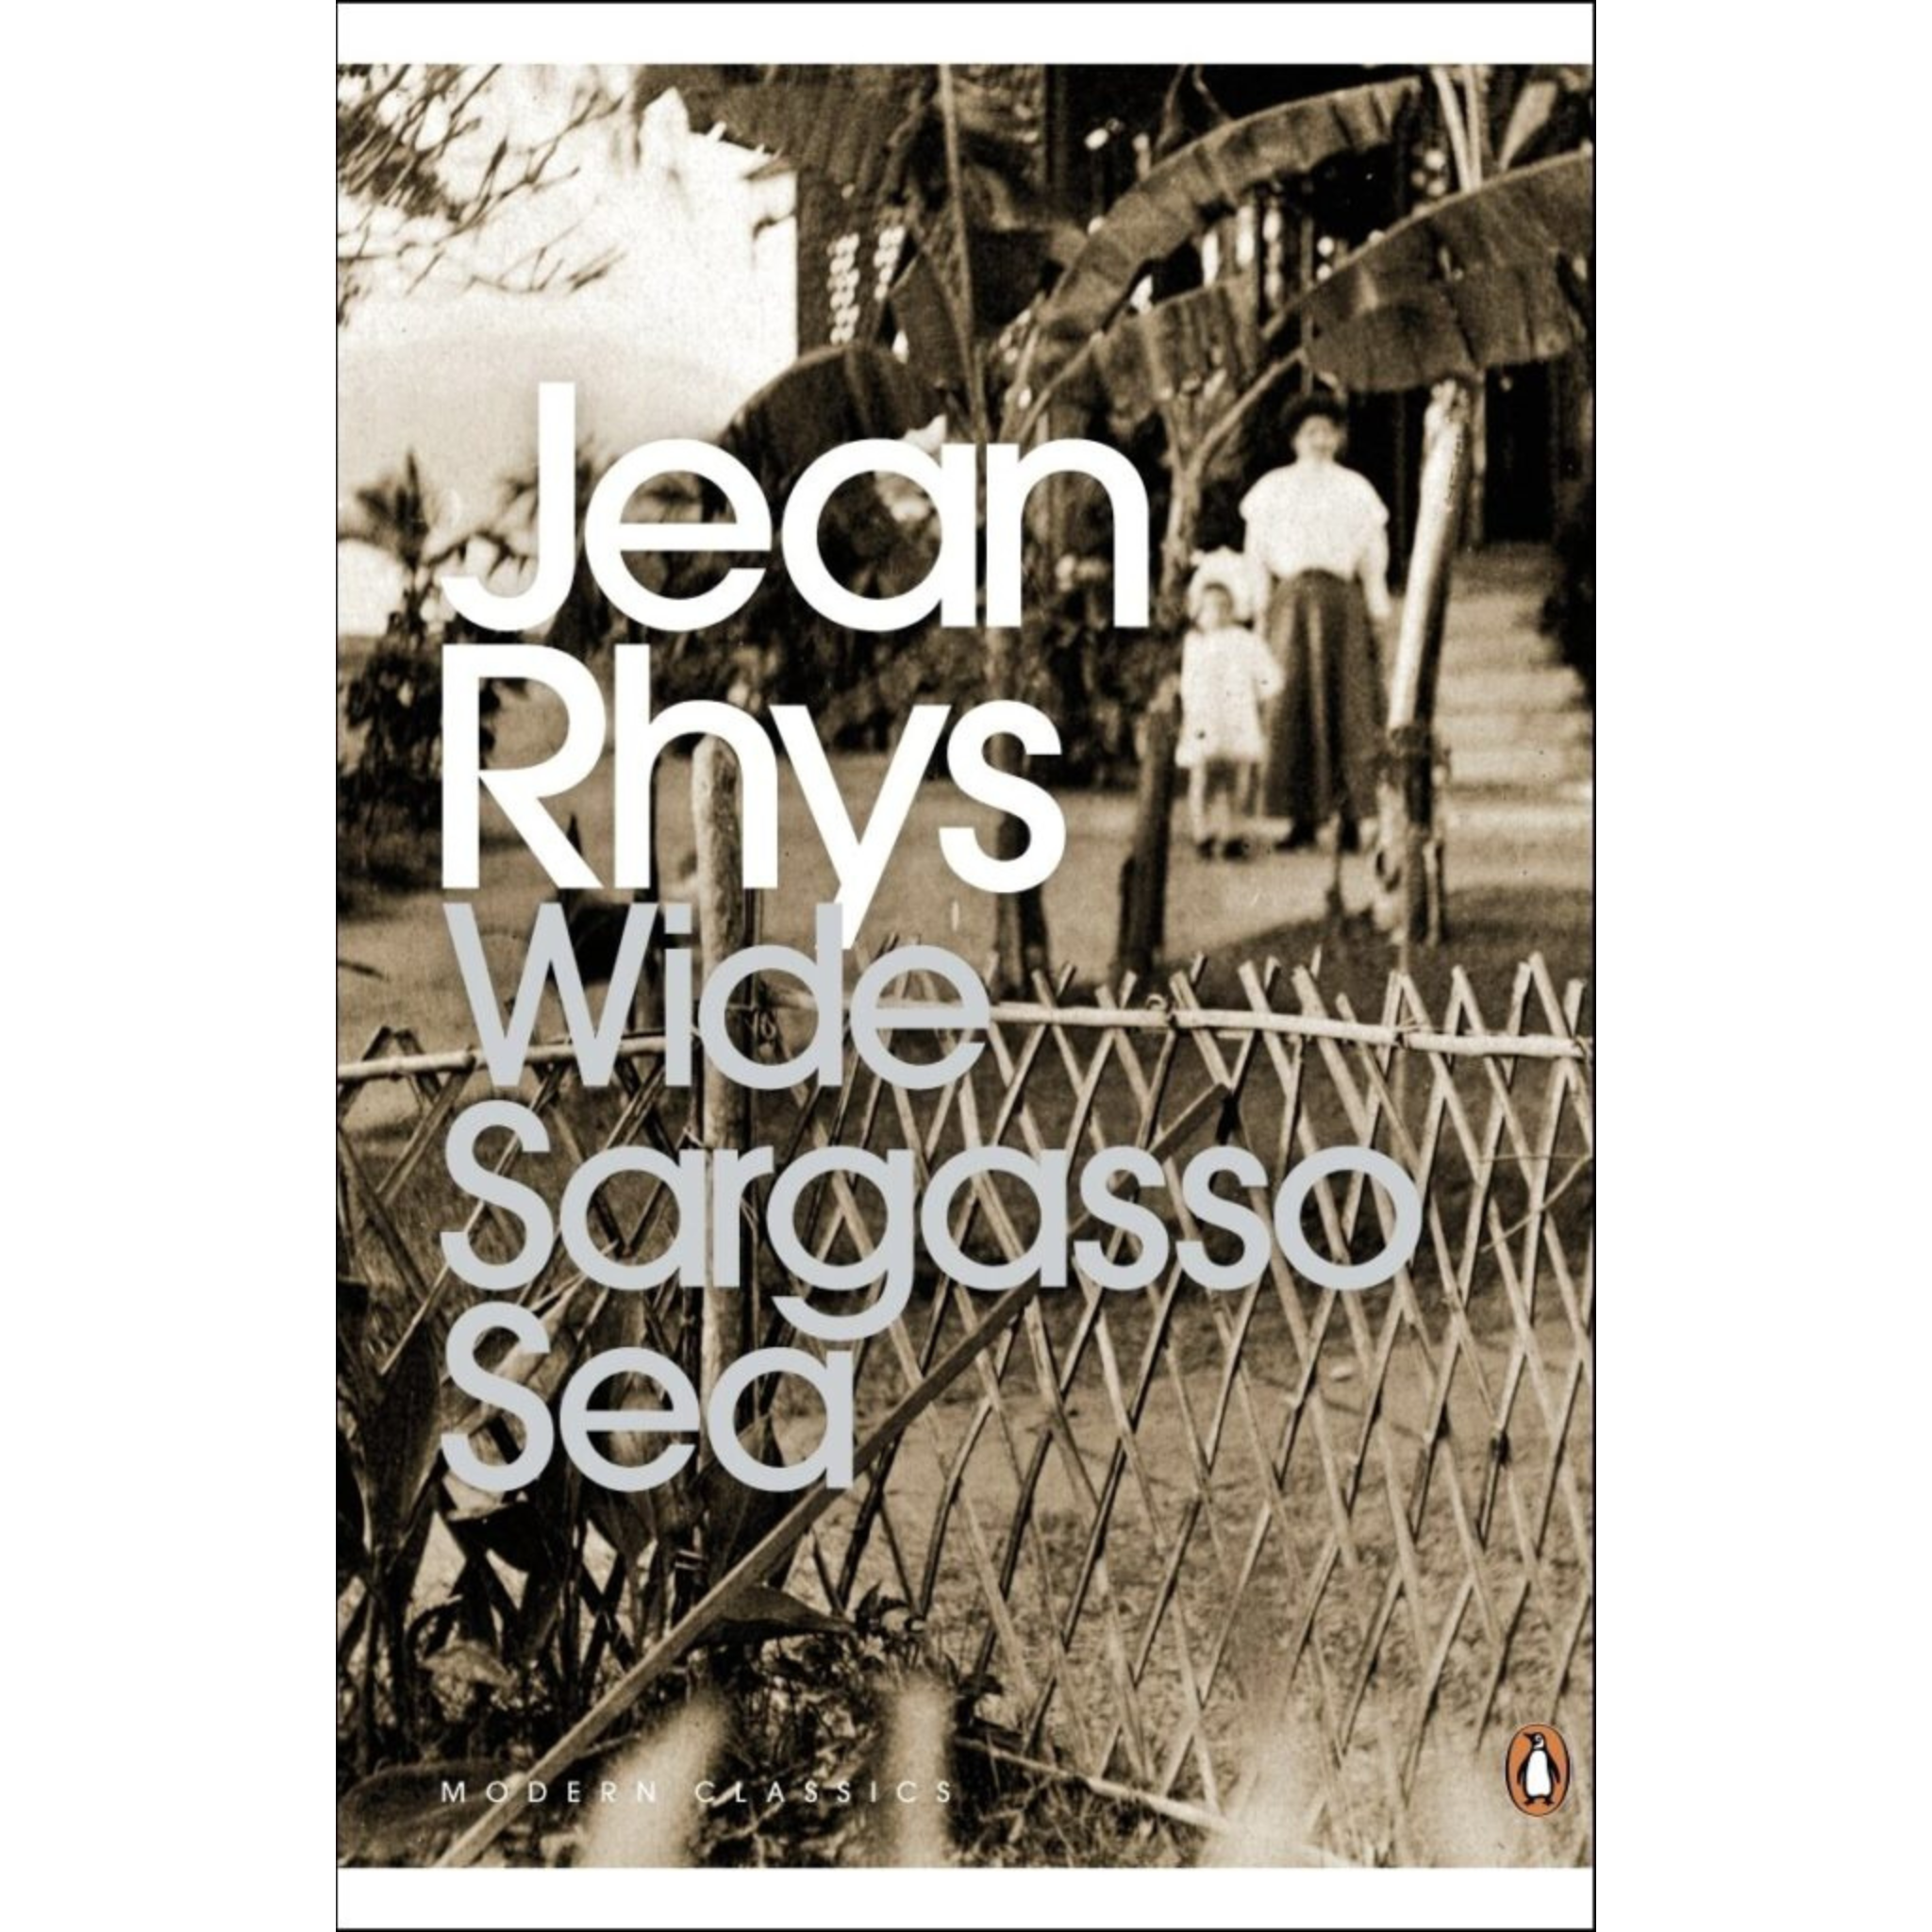 Wide Sargasso  Sea (1966) By Jean Rhys.